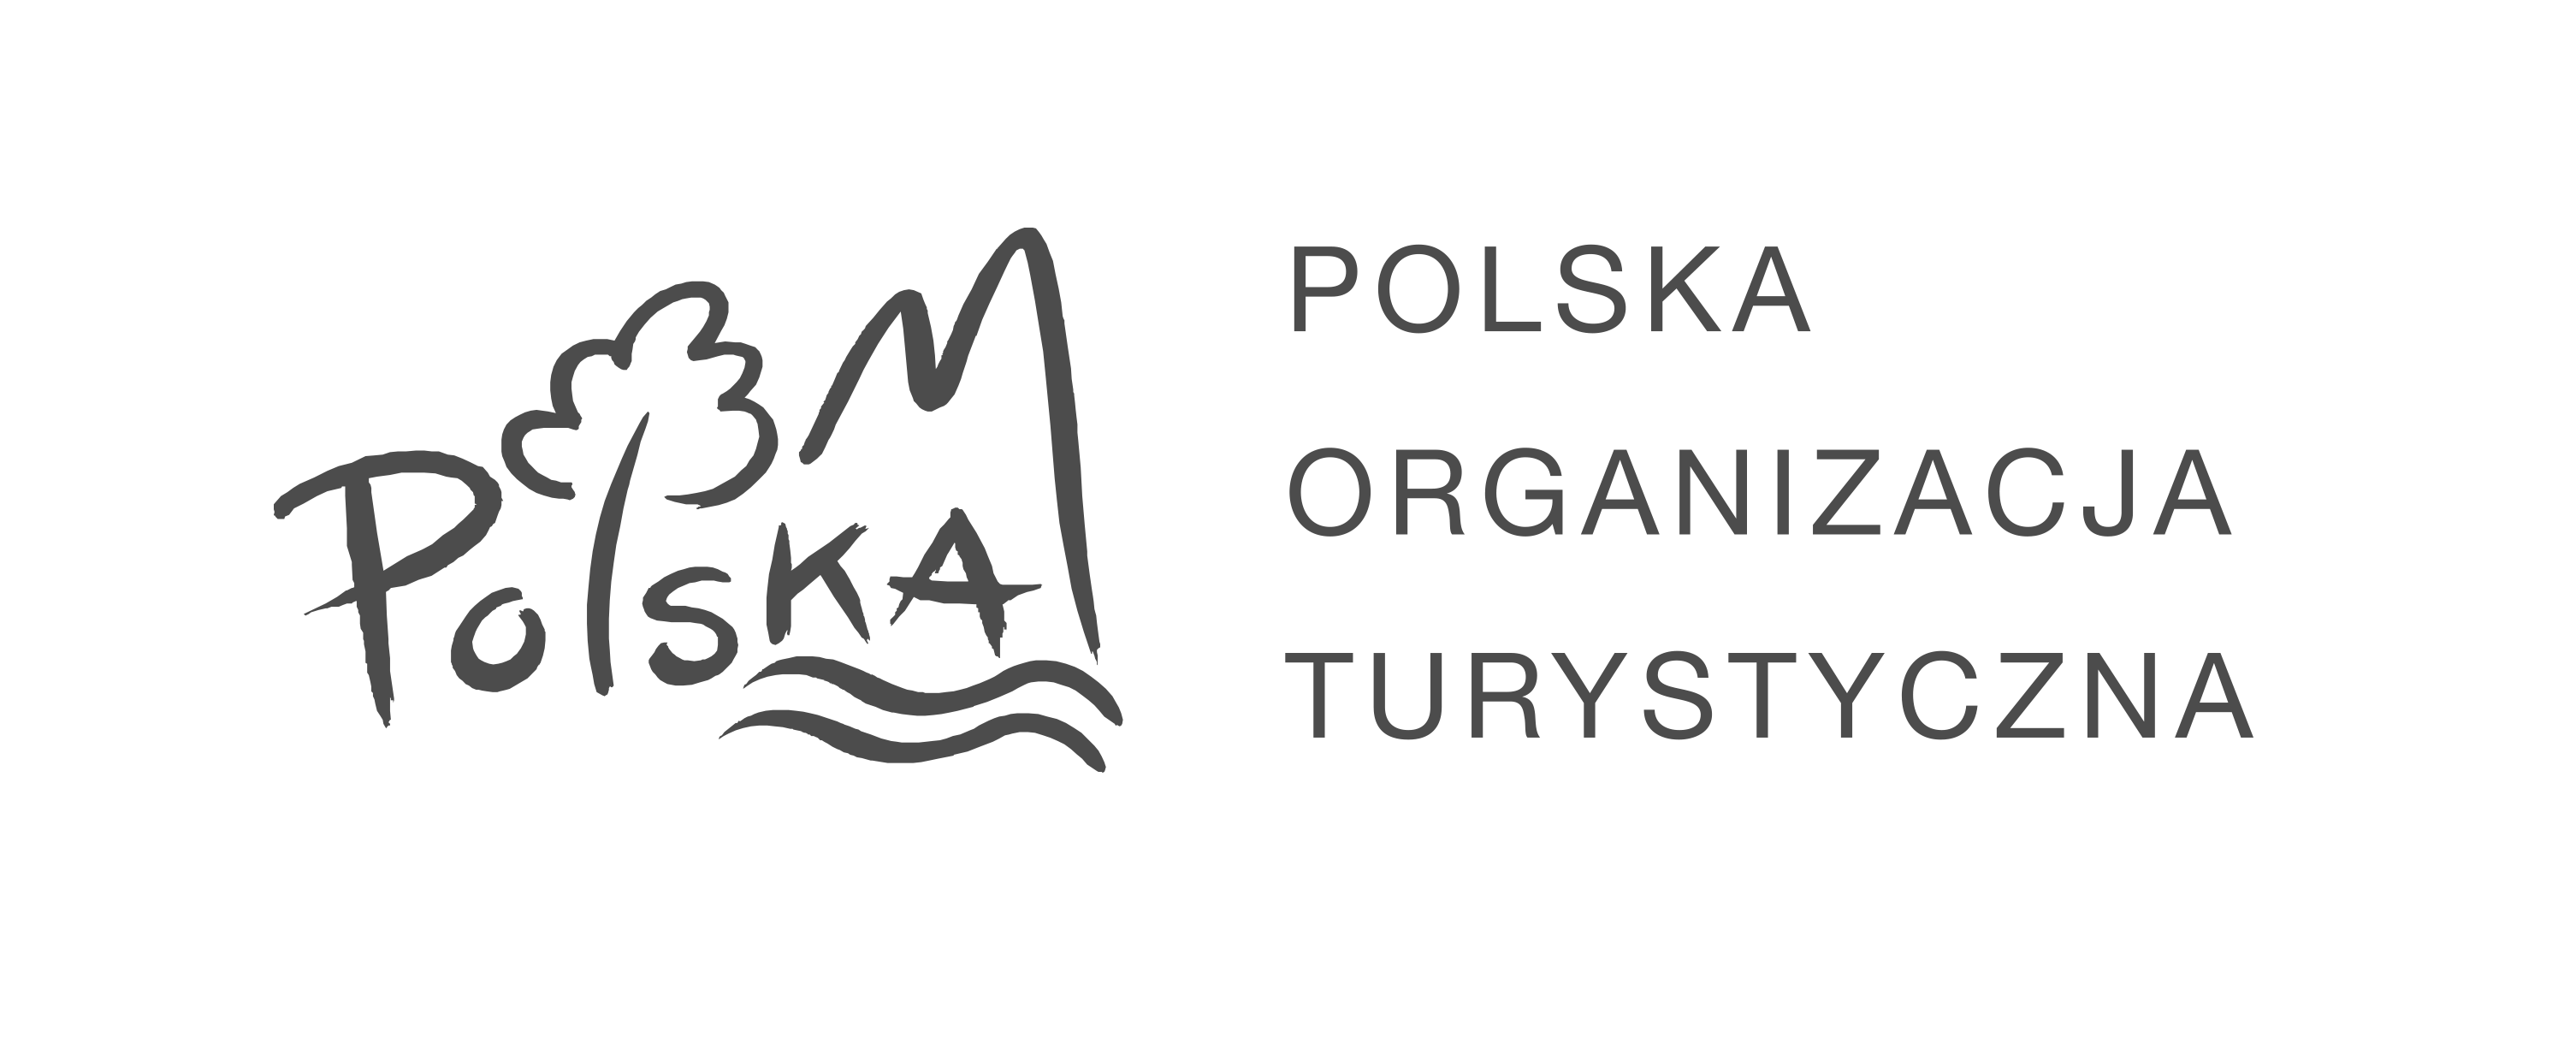 Polish Tourist Organisation